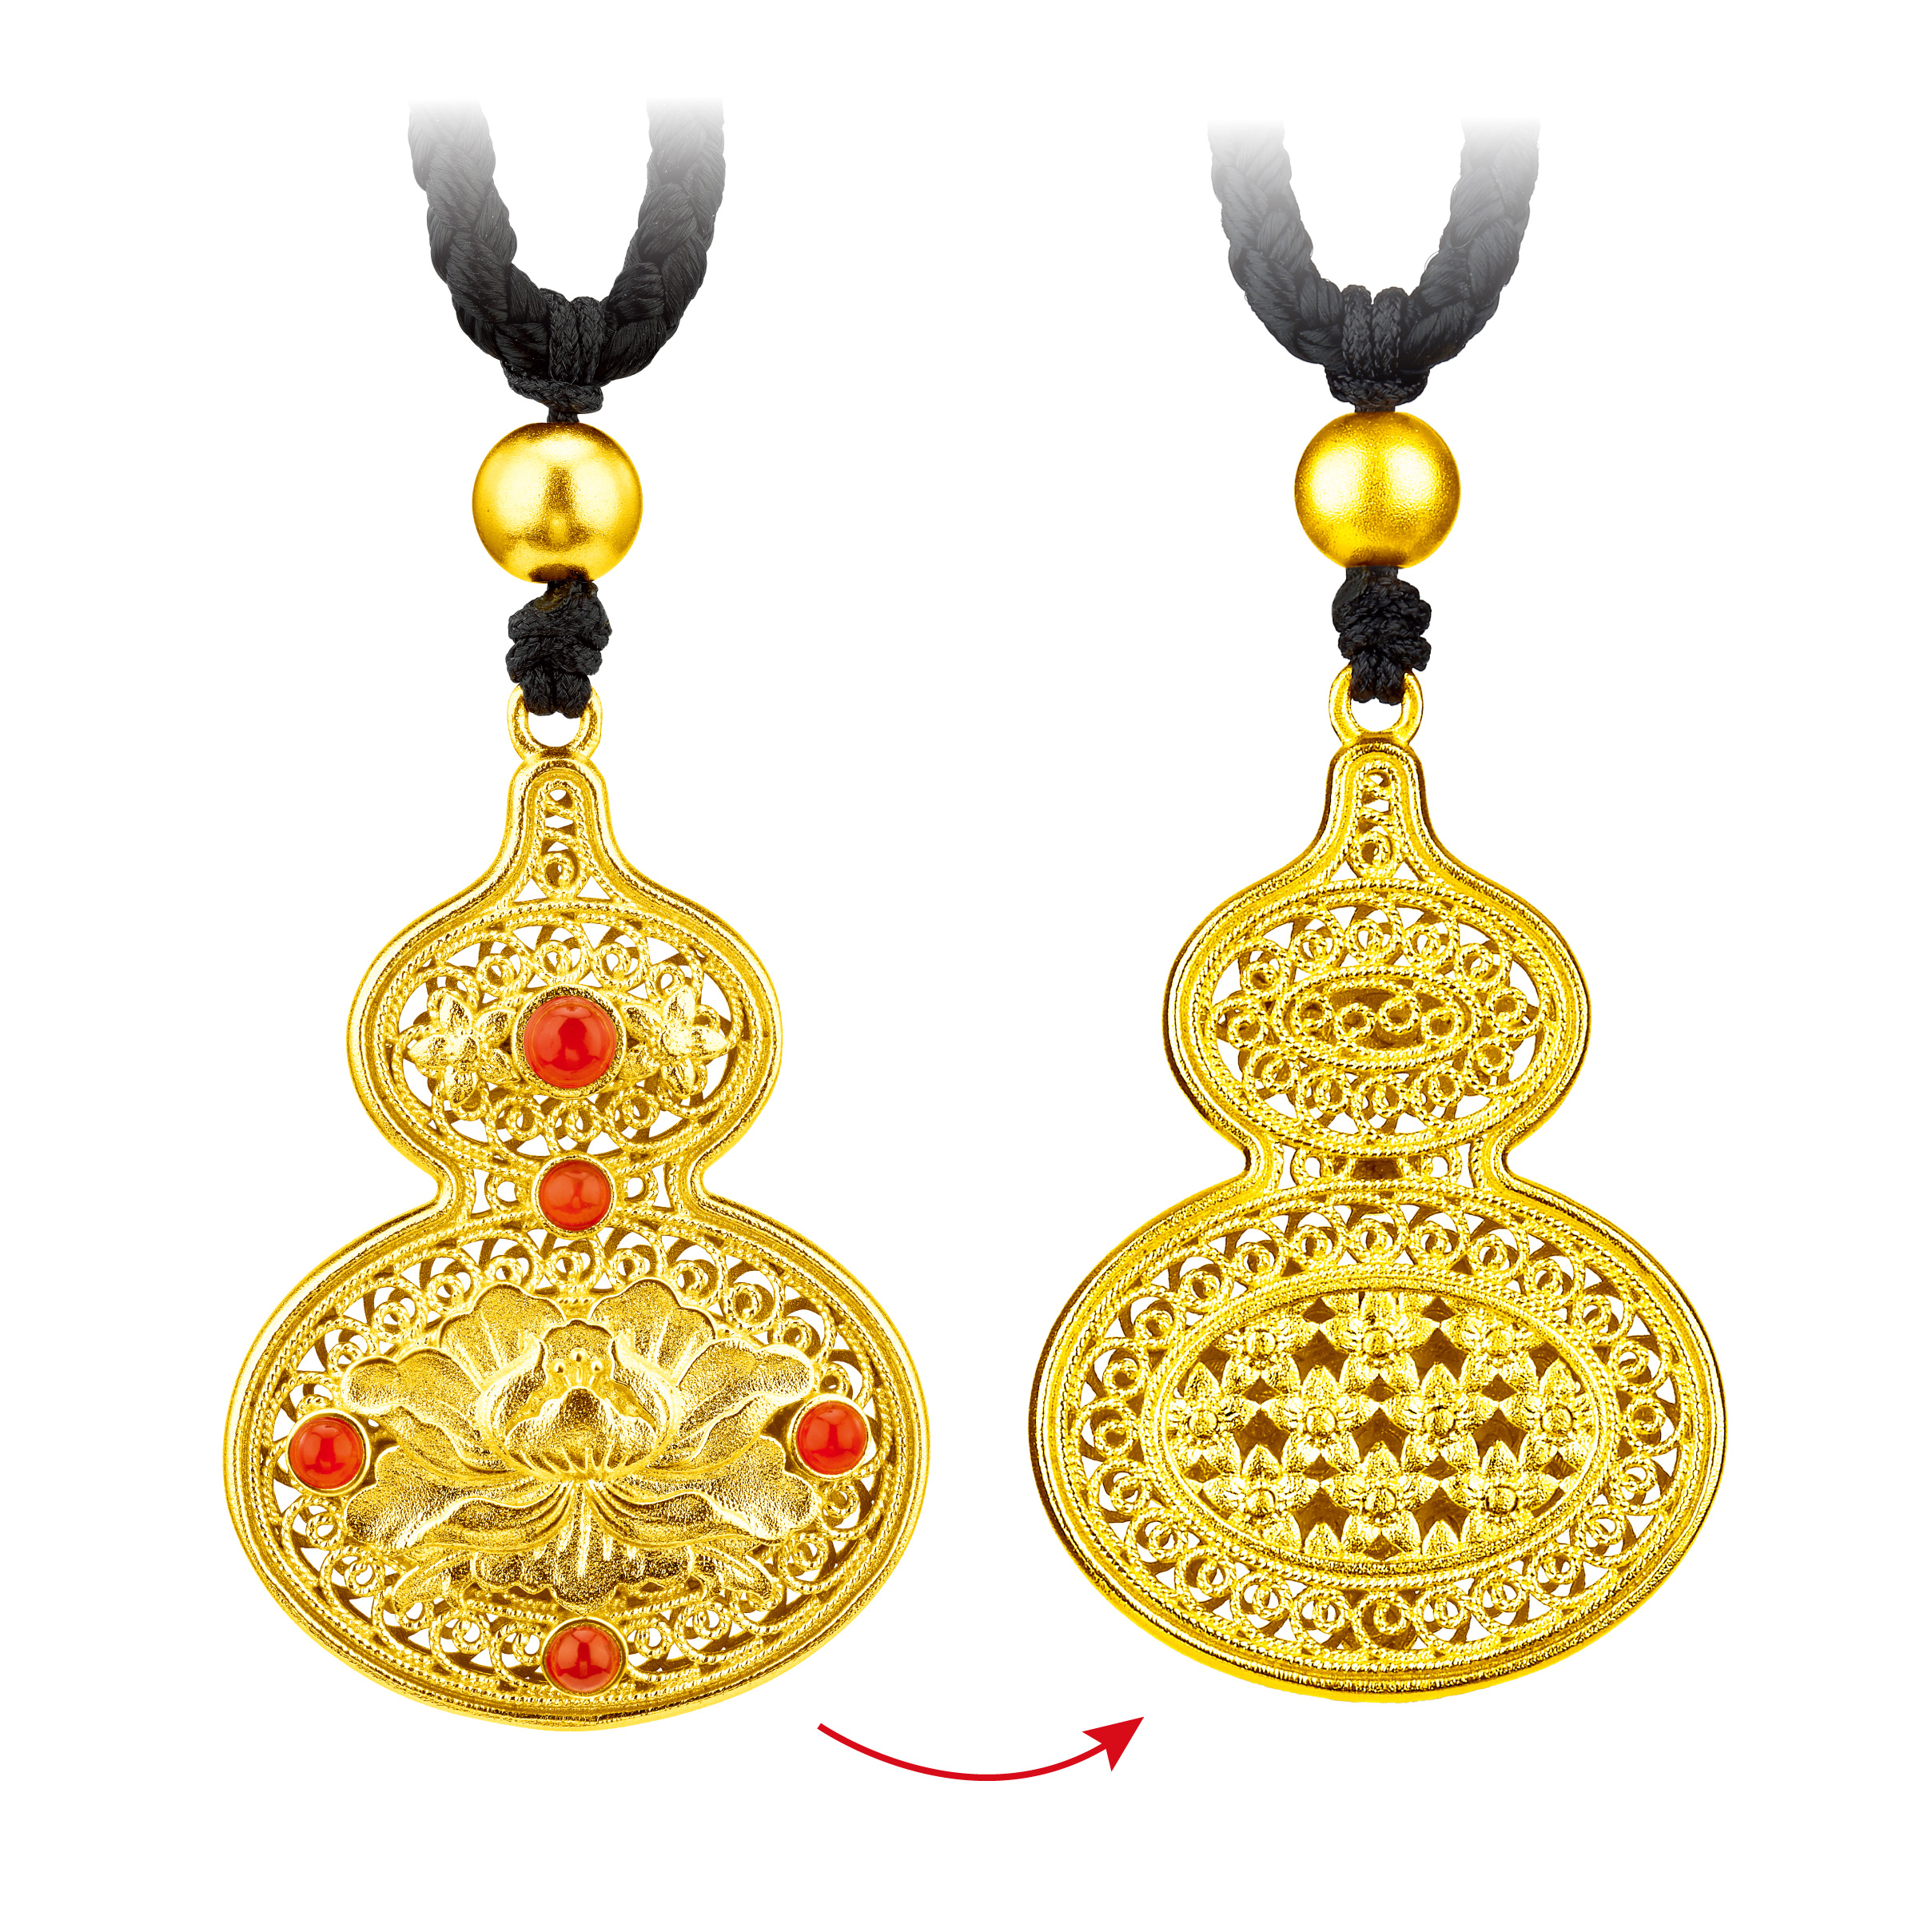 F-style Antique Gold Pendant